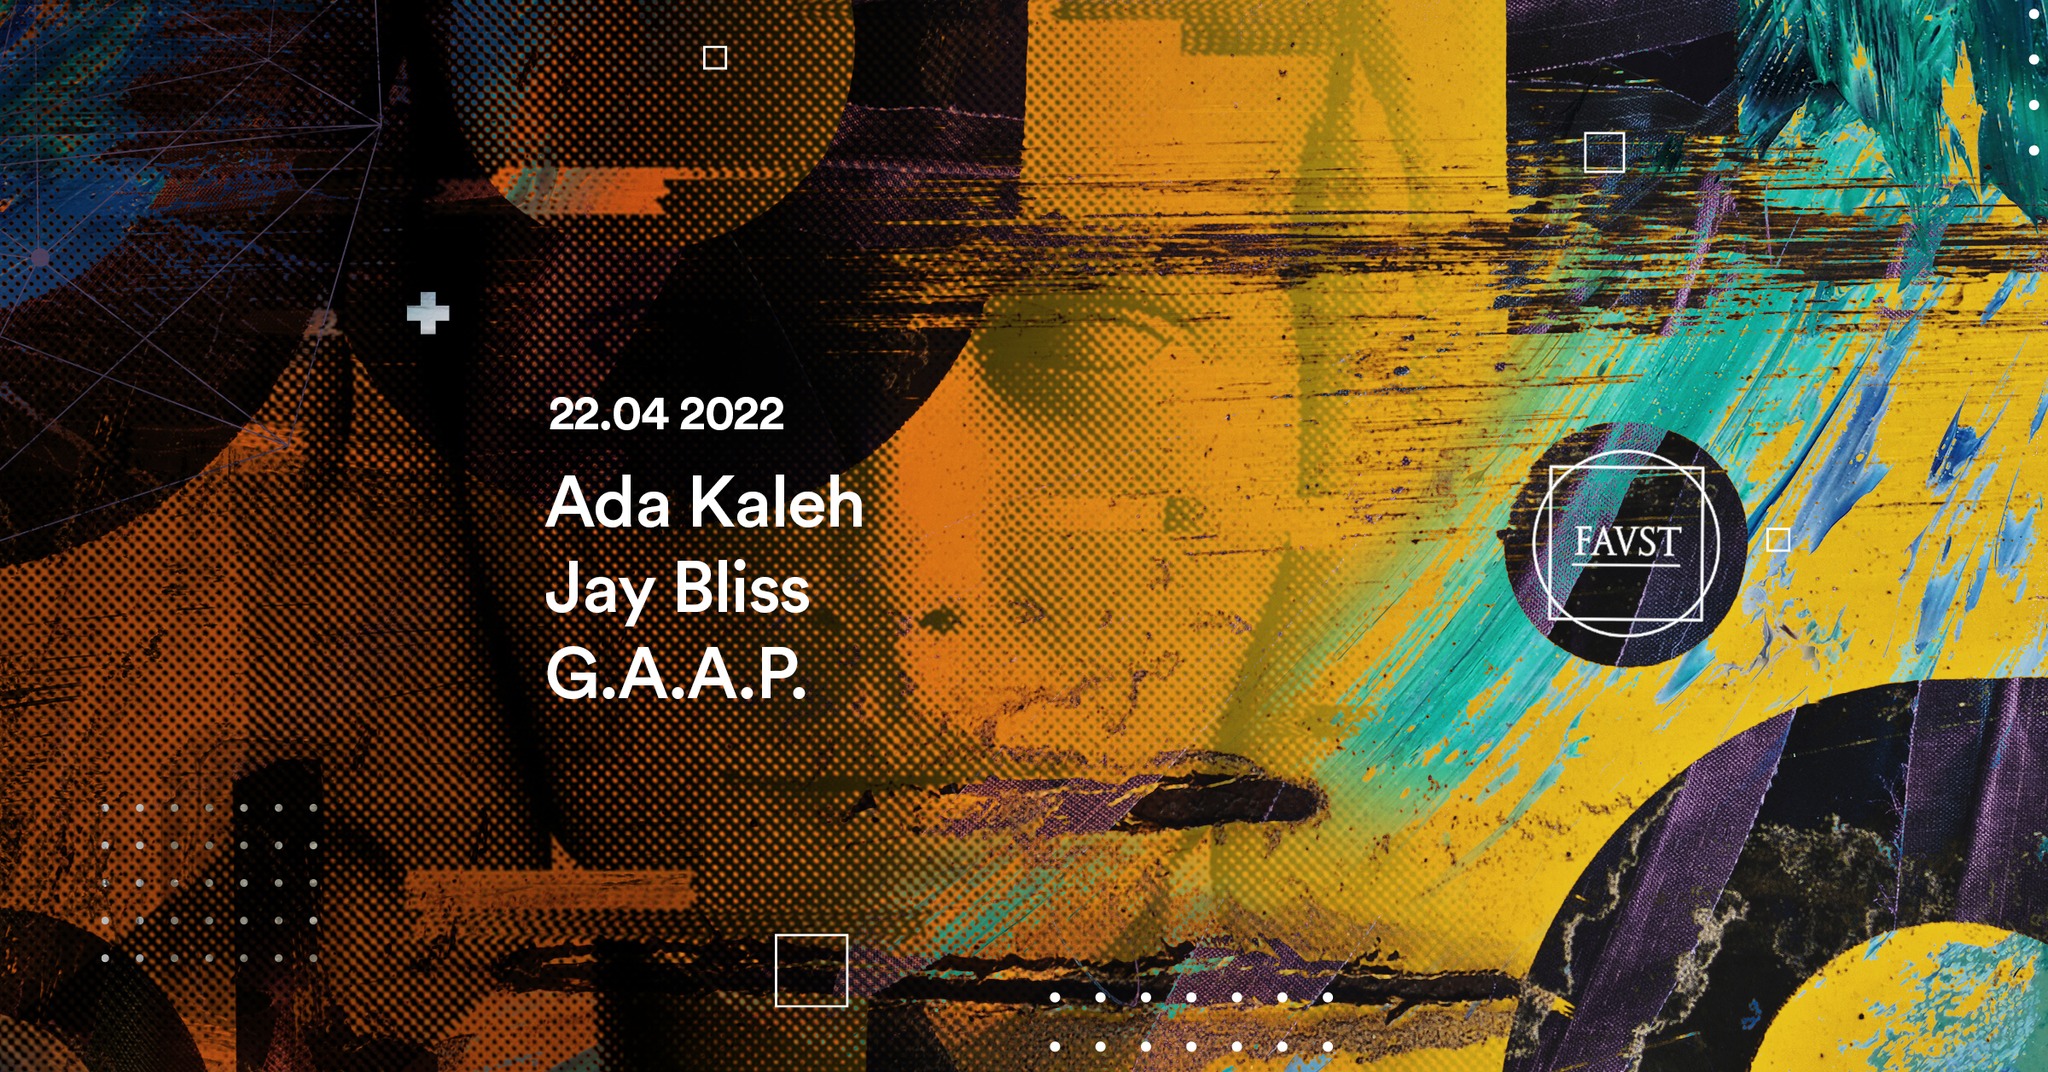 Ada Kaleh / Jay Bliss / G.A.A.P. @ Faust